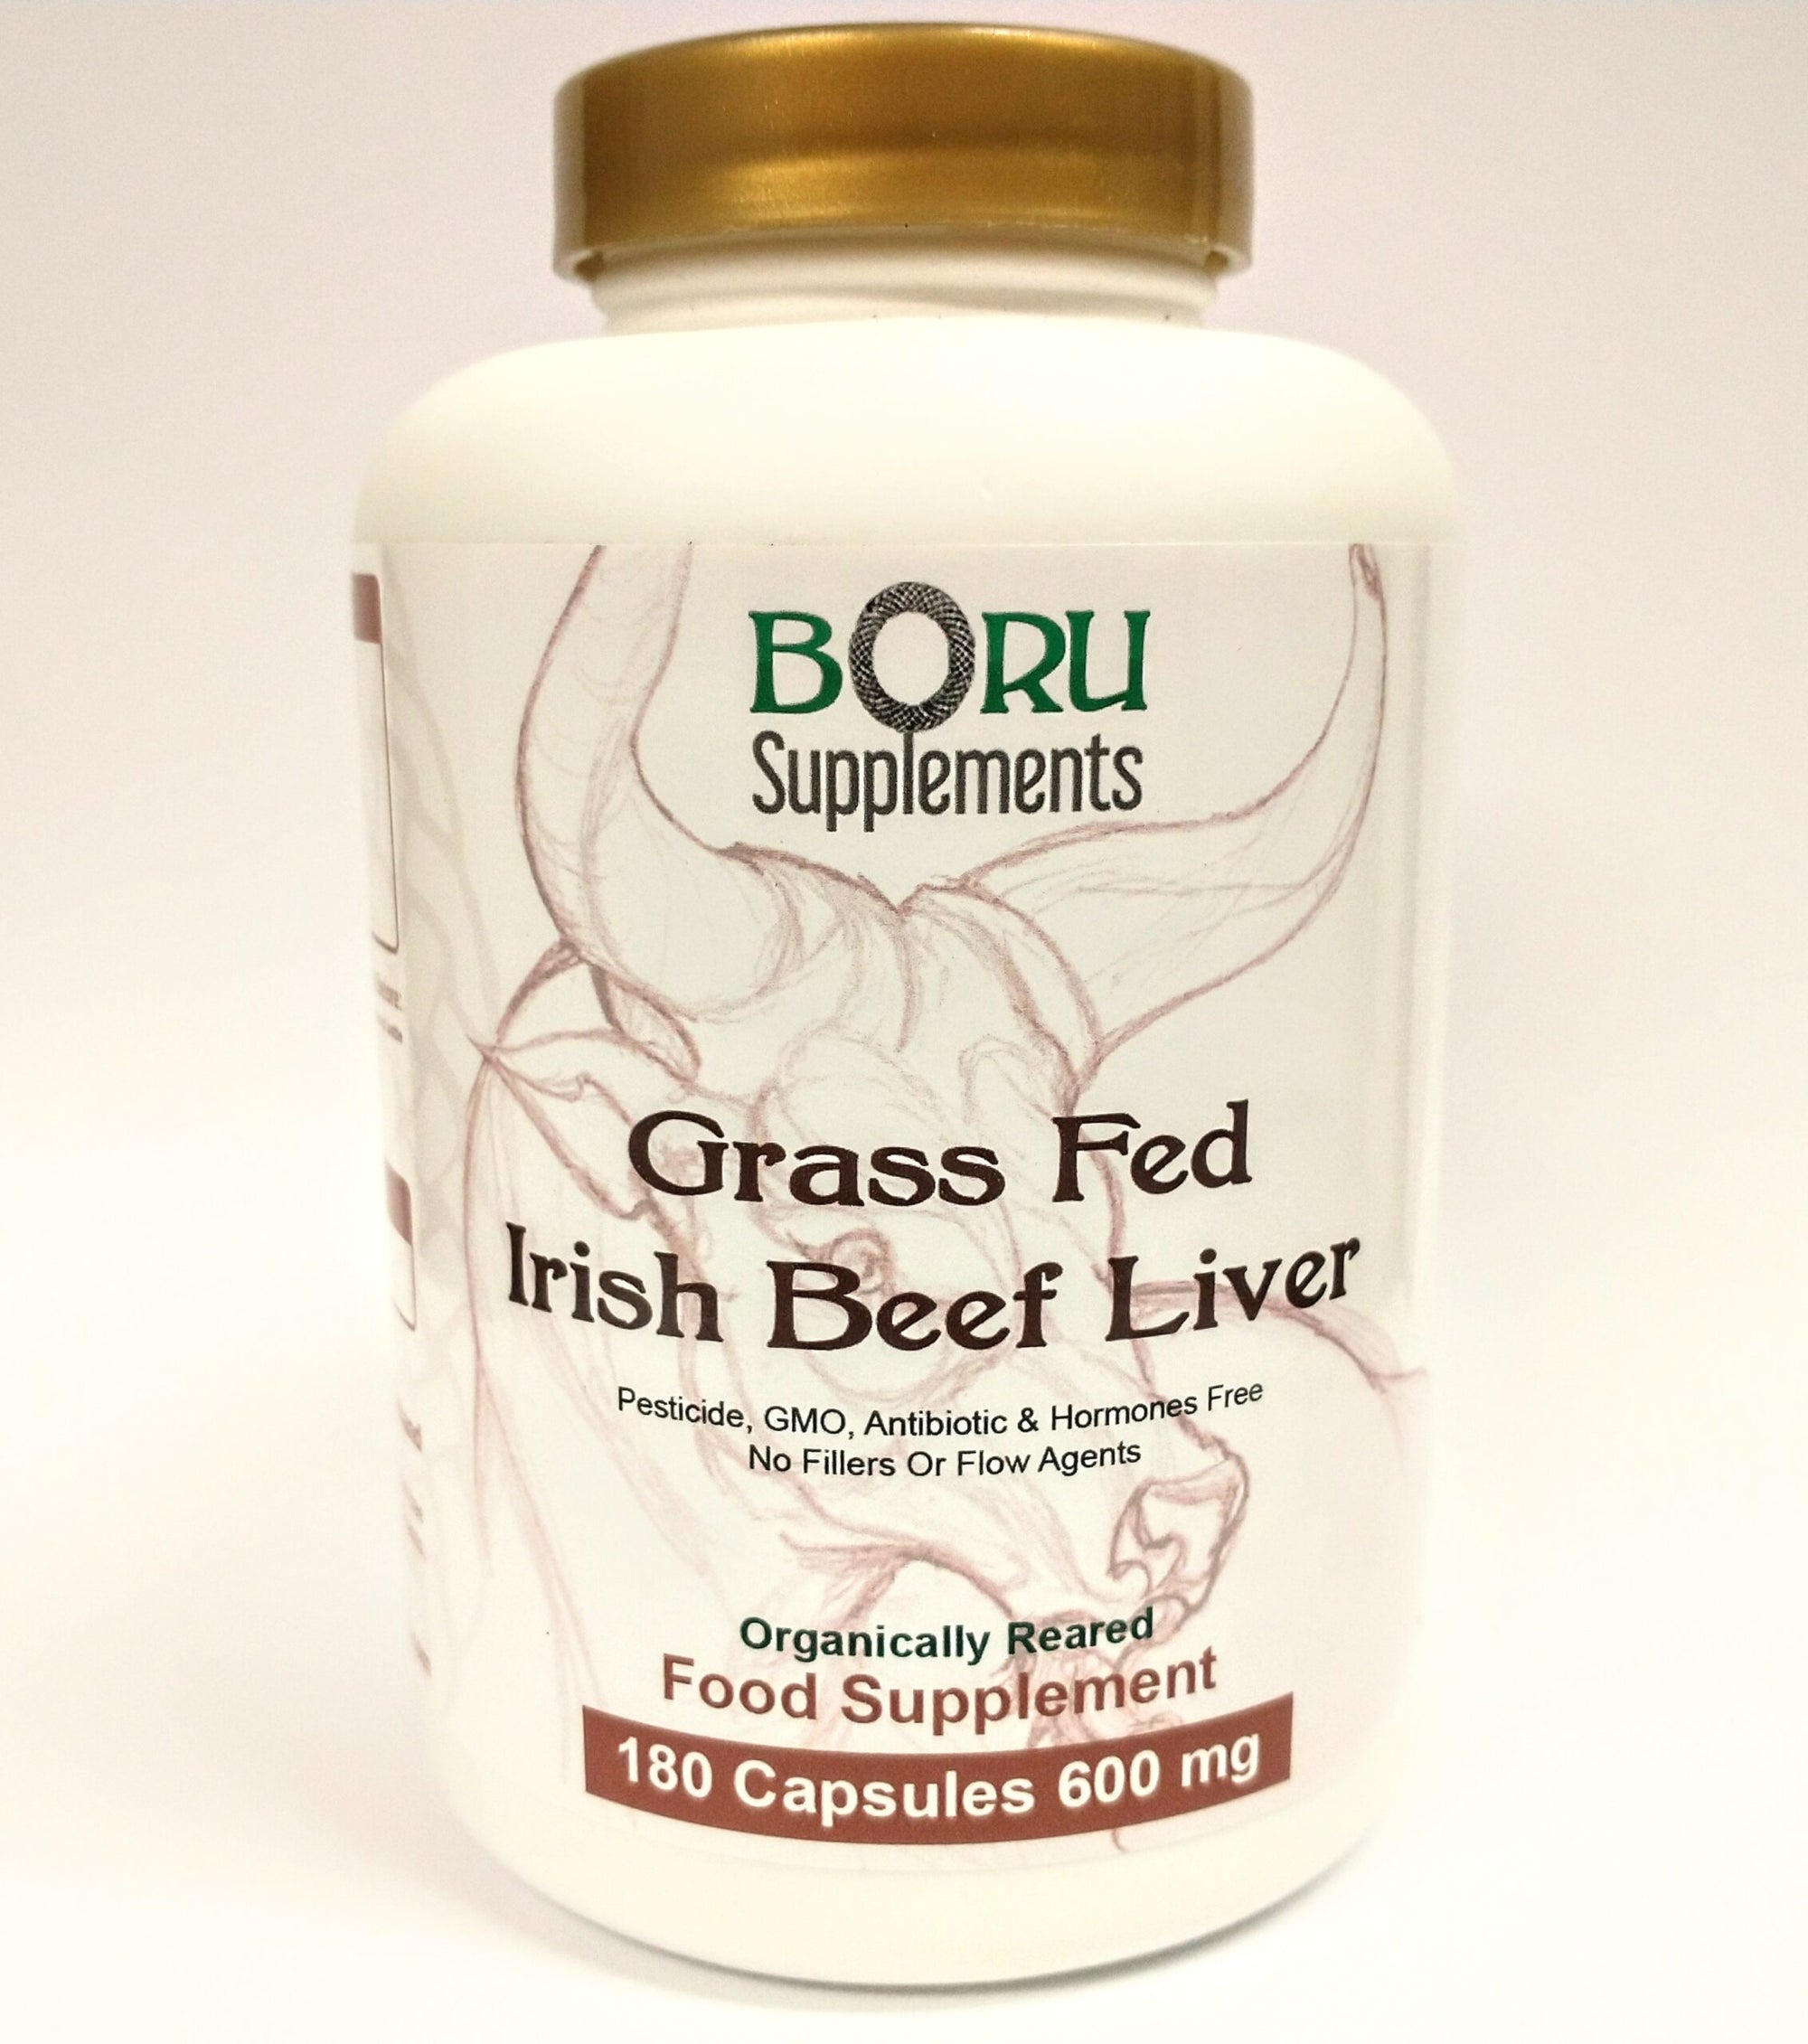 Grass fed Irish beef liver 600mg - 180 capsules